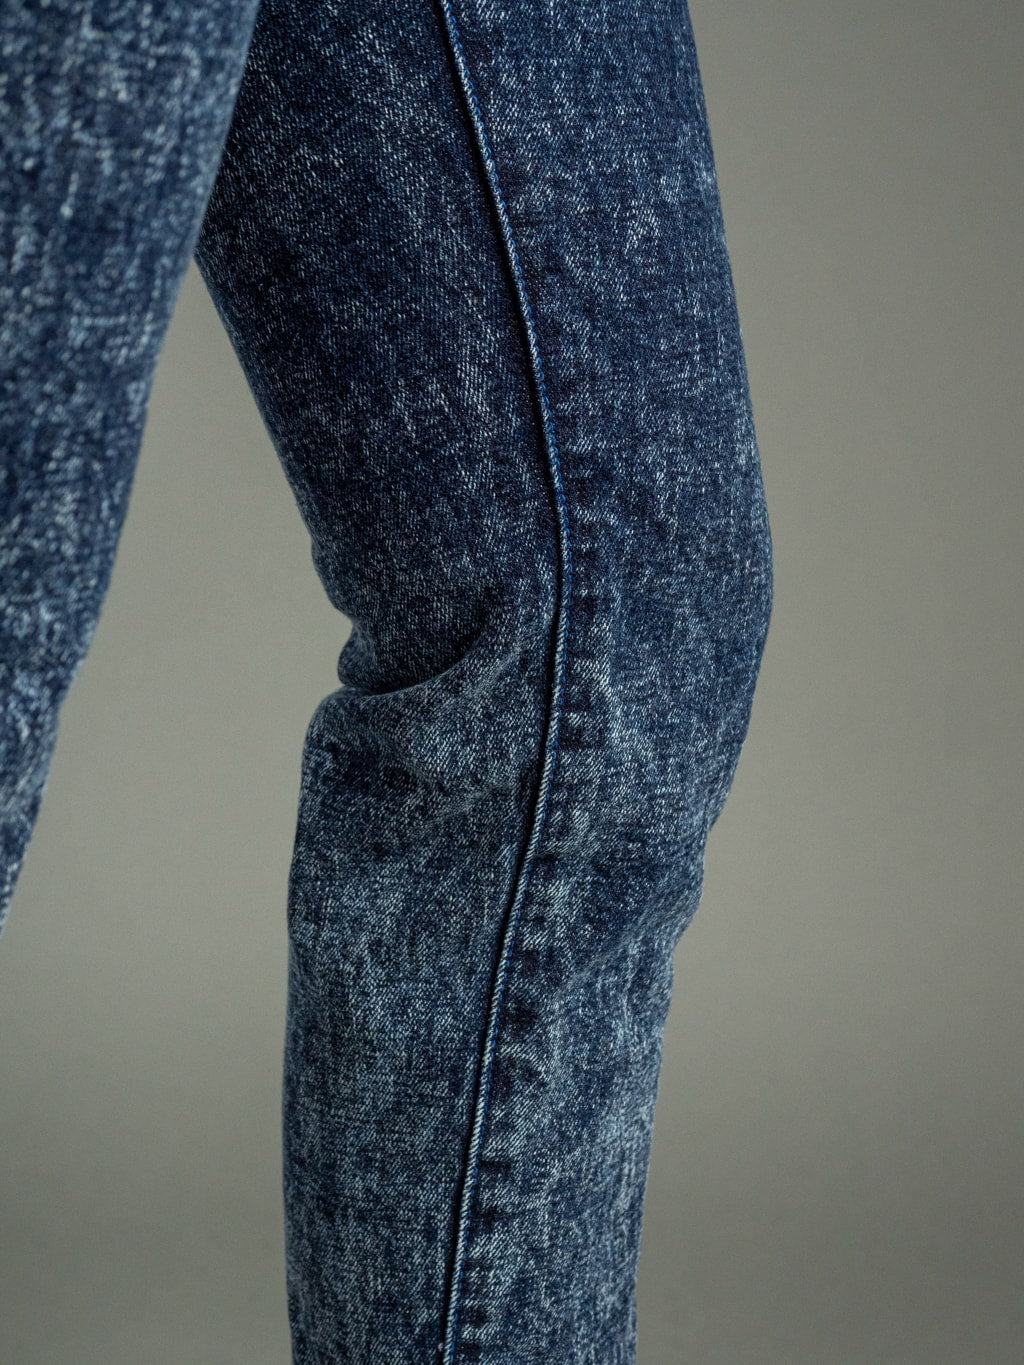 Tanuki Natural Acid Wash High Tapered Jeans Inseam